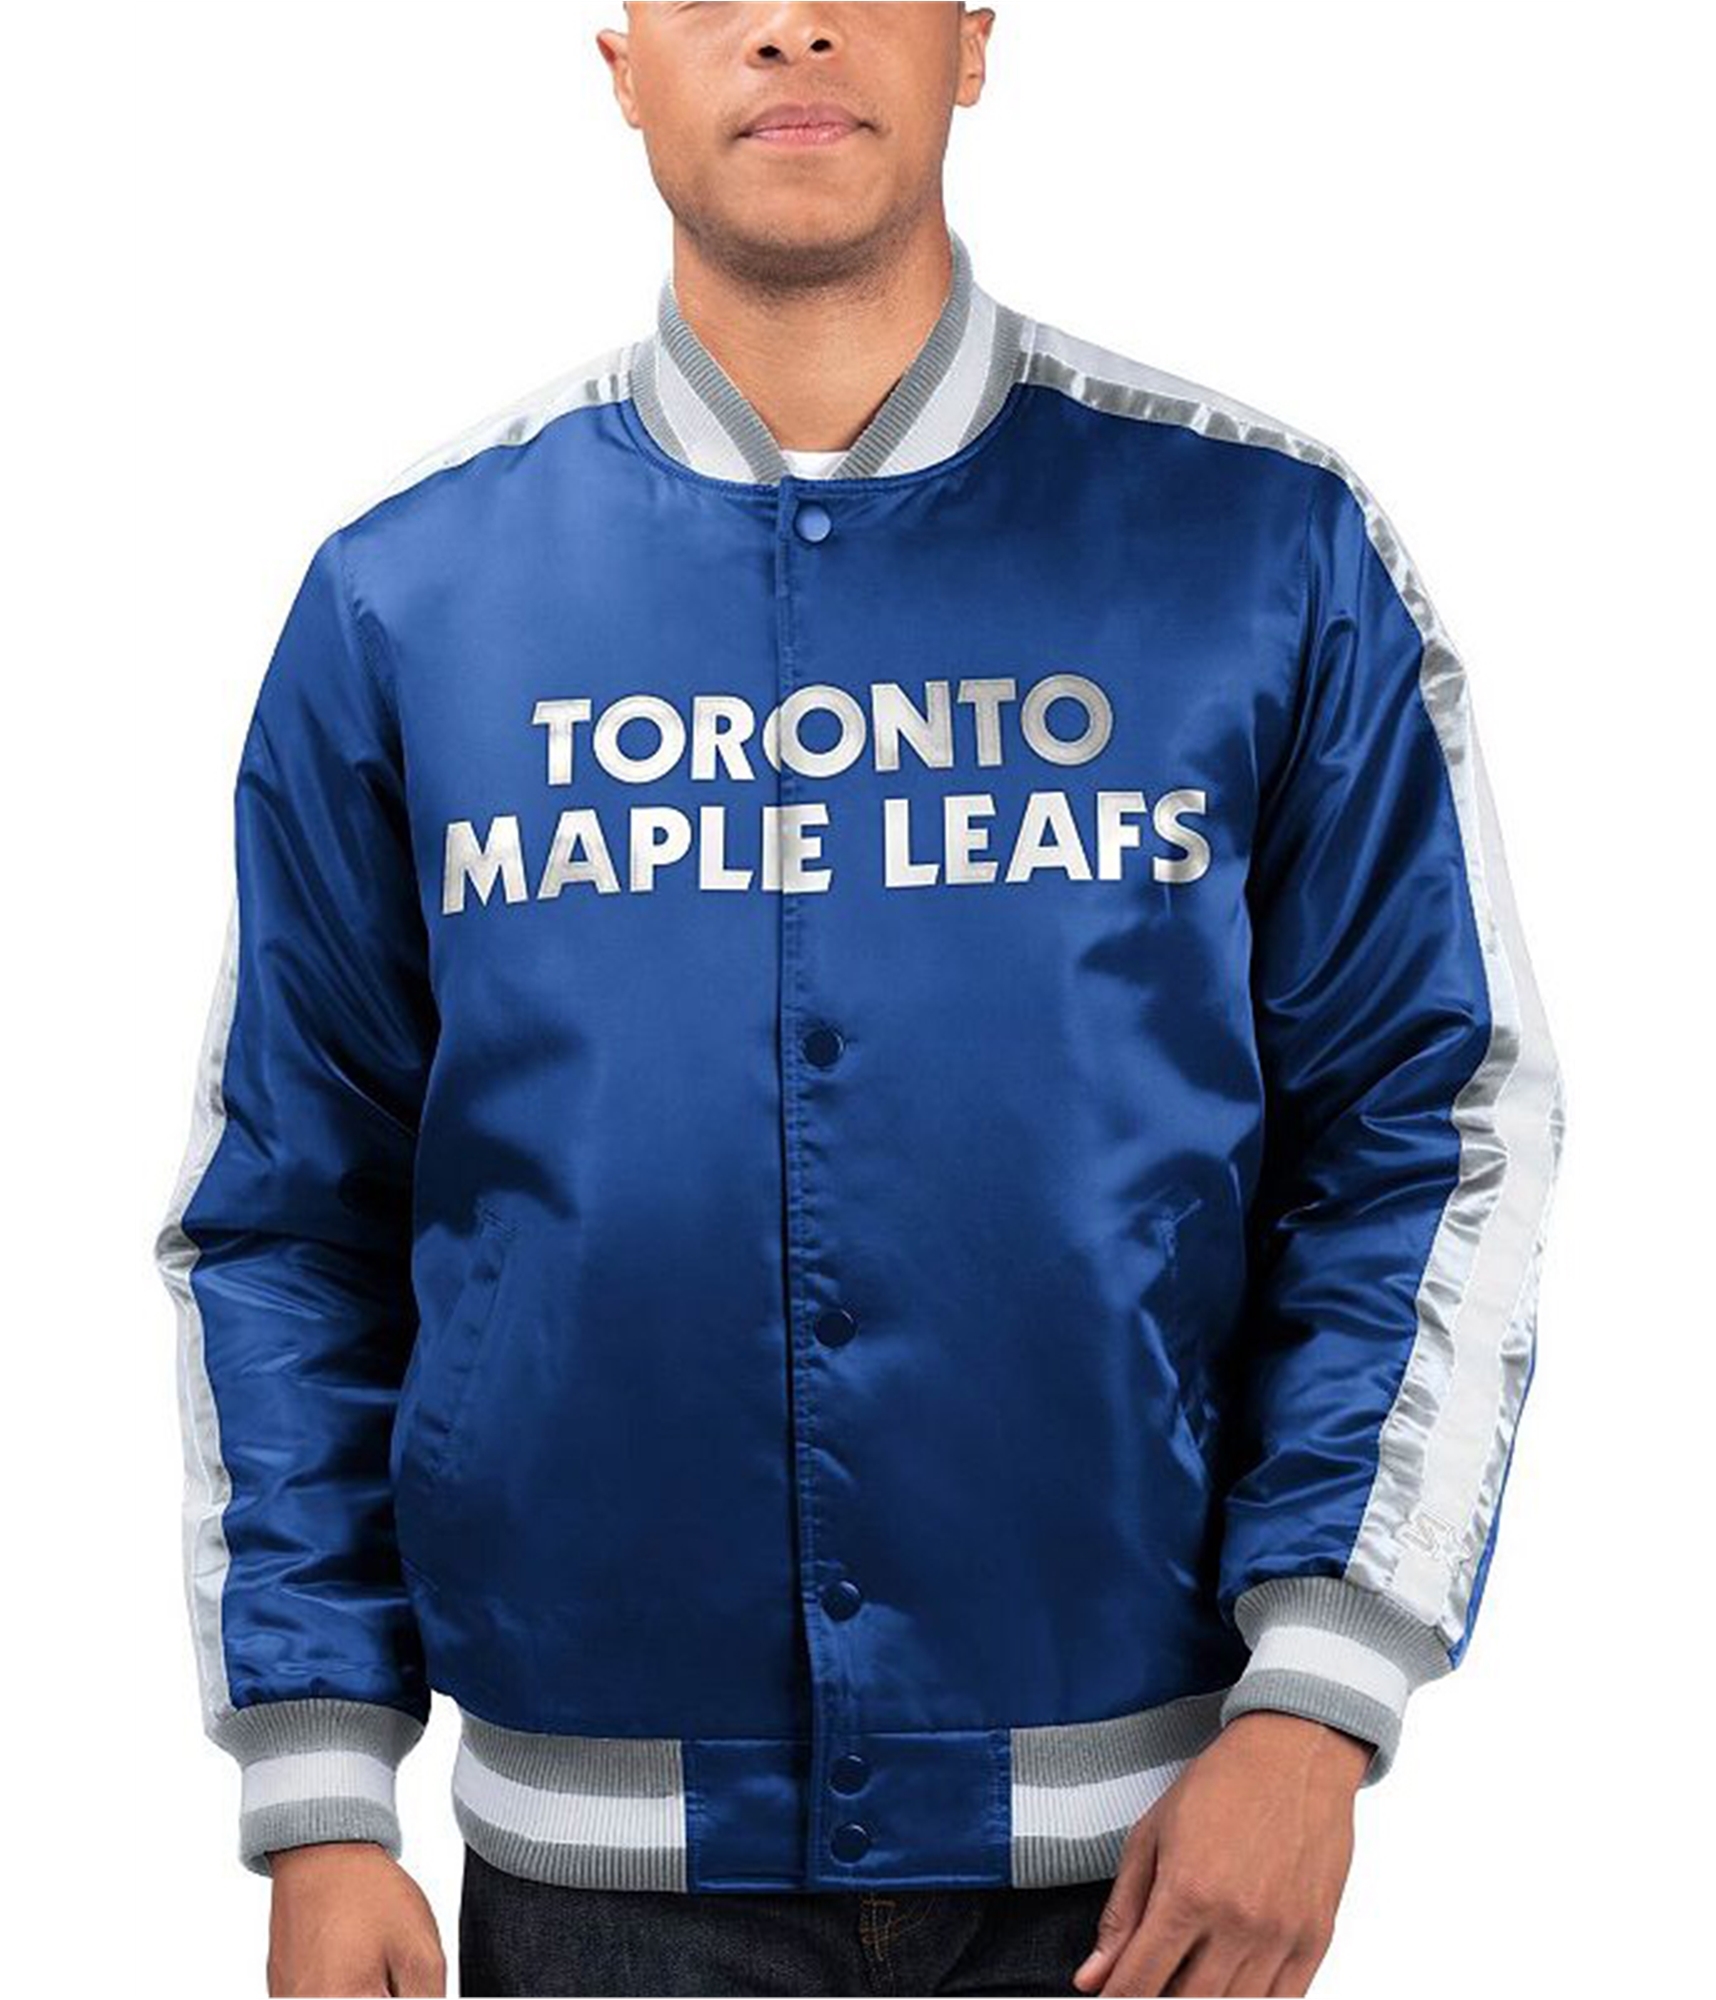 Toronto Maple Leafs Sweatshirts & Hoodies for Sale